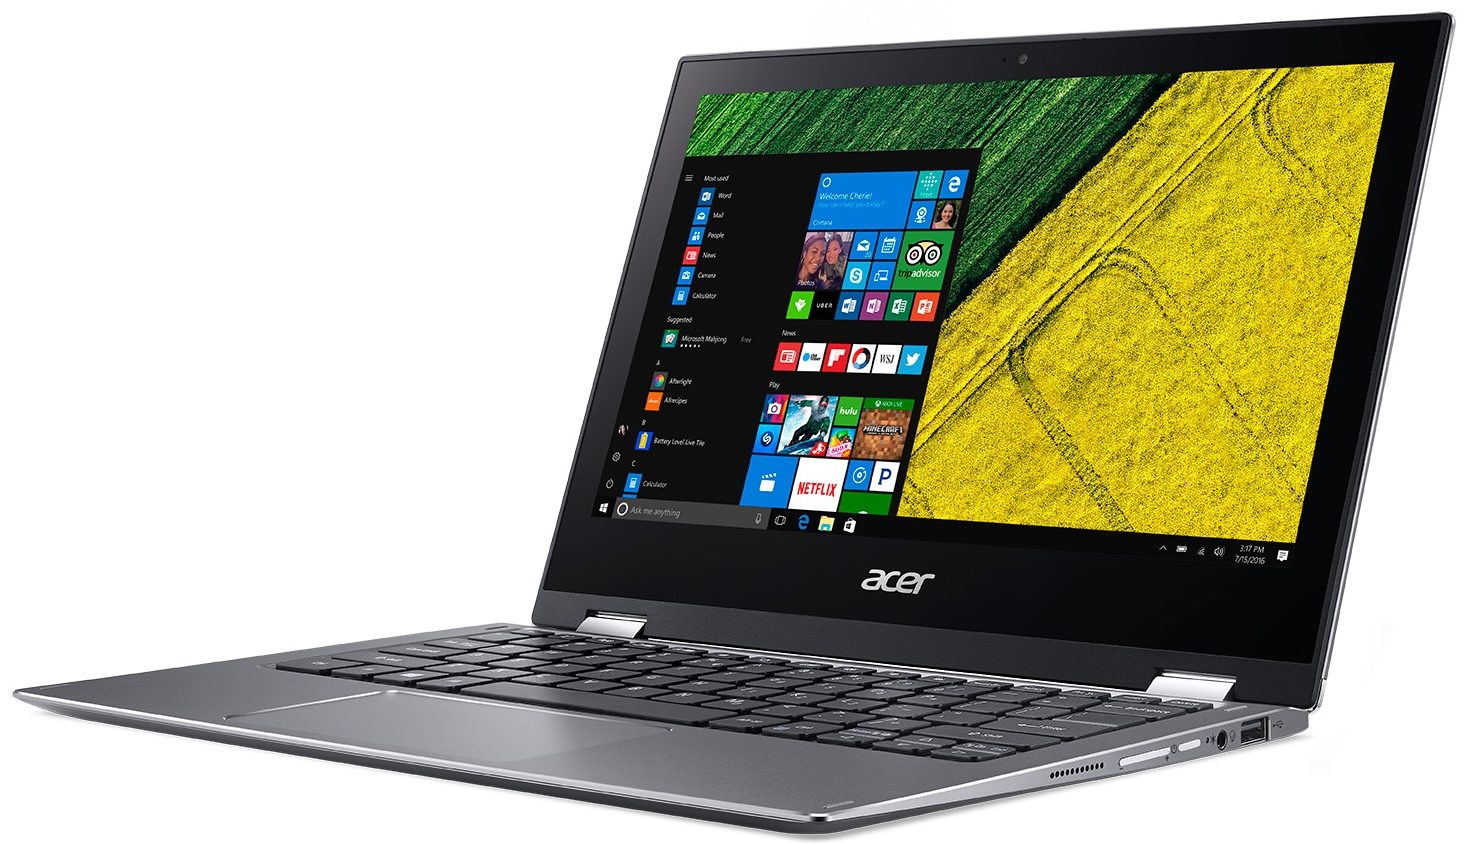 Ноутбук Acer Spin 1 sp111-34n. Aspire 8. CER Swift 3 sf315-51 n17p4. Acer Niro 5 an515-51.